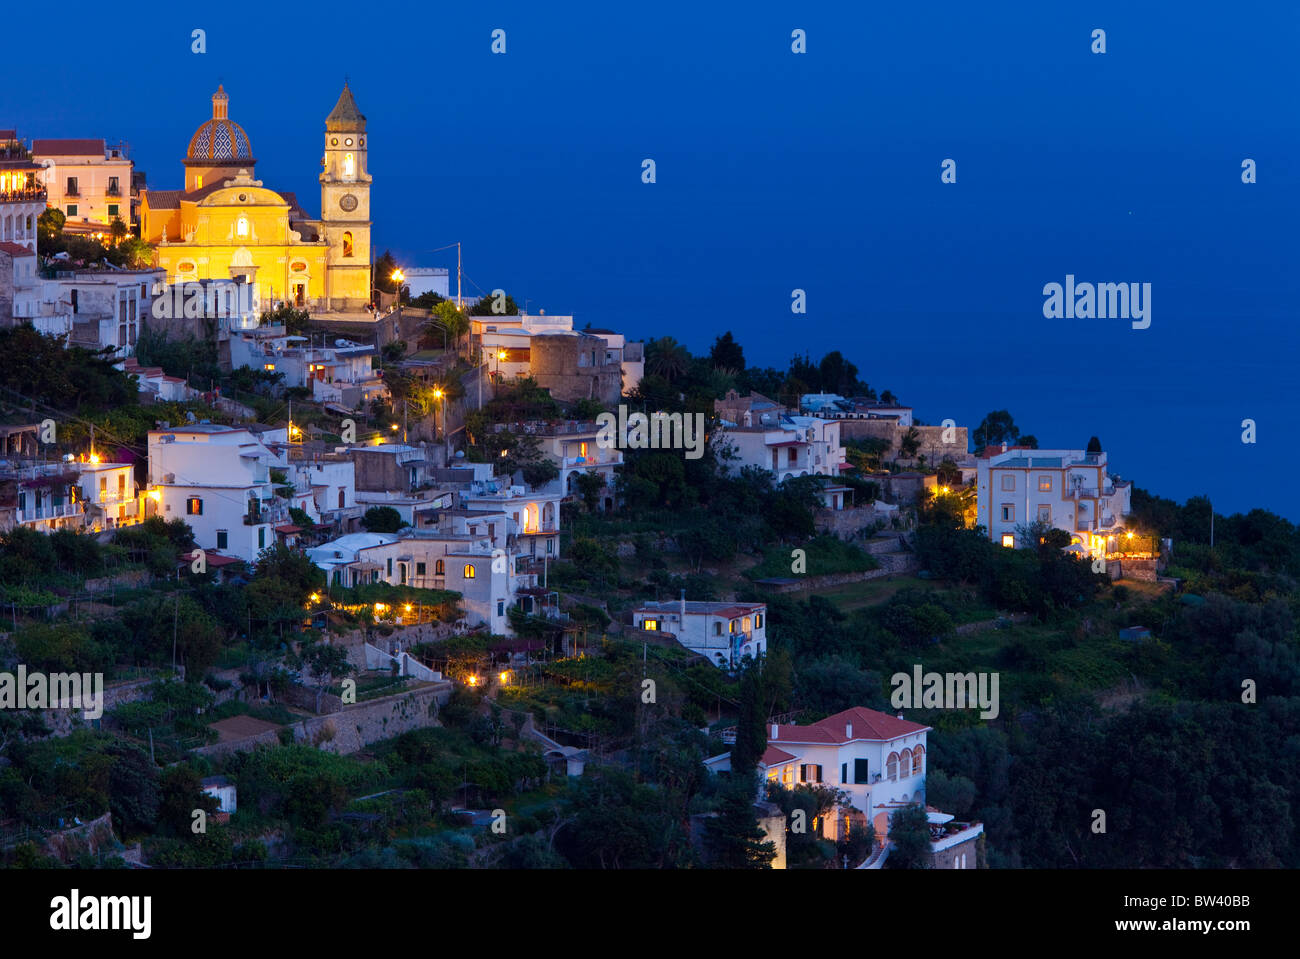 Amalfi coast italy praiano hi-res stock photography and images - Alamy